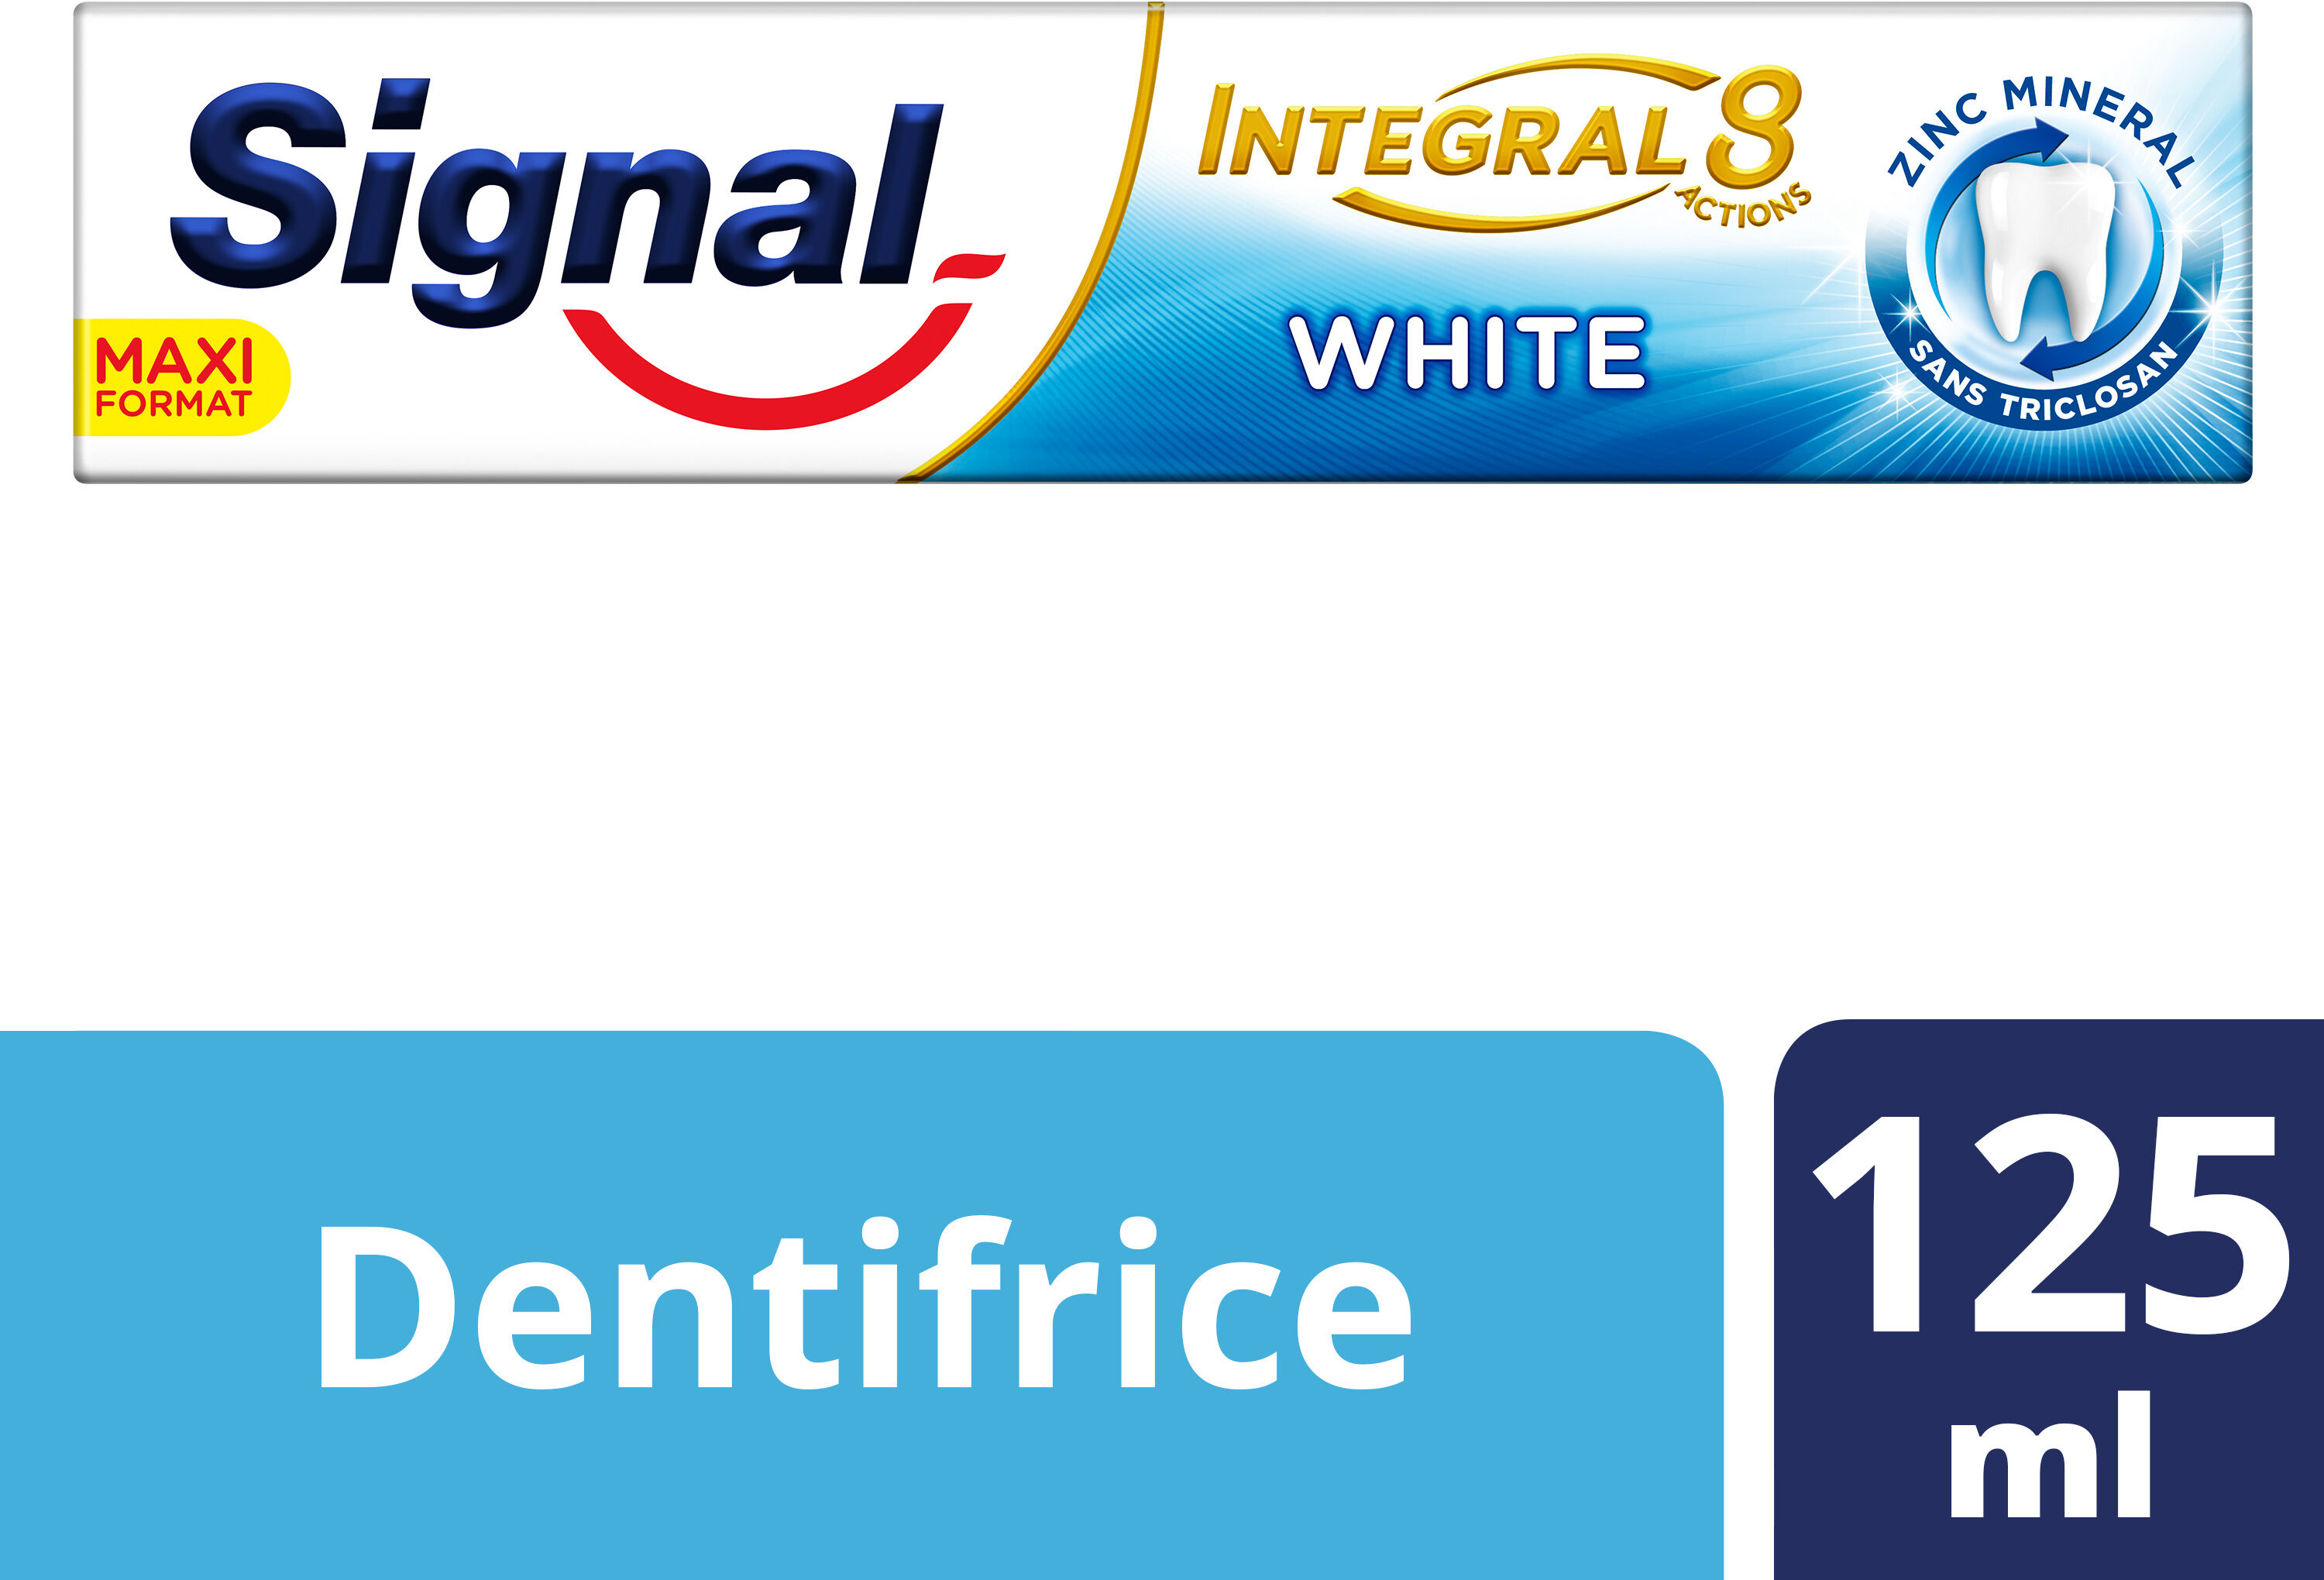 Signal Dentifrice Integral 8 White - Produit - fr